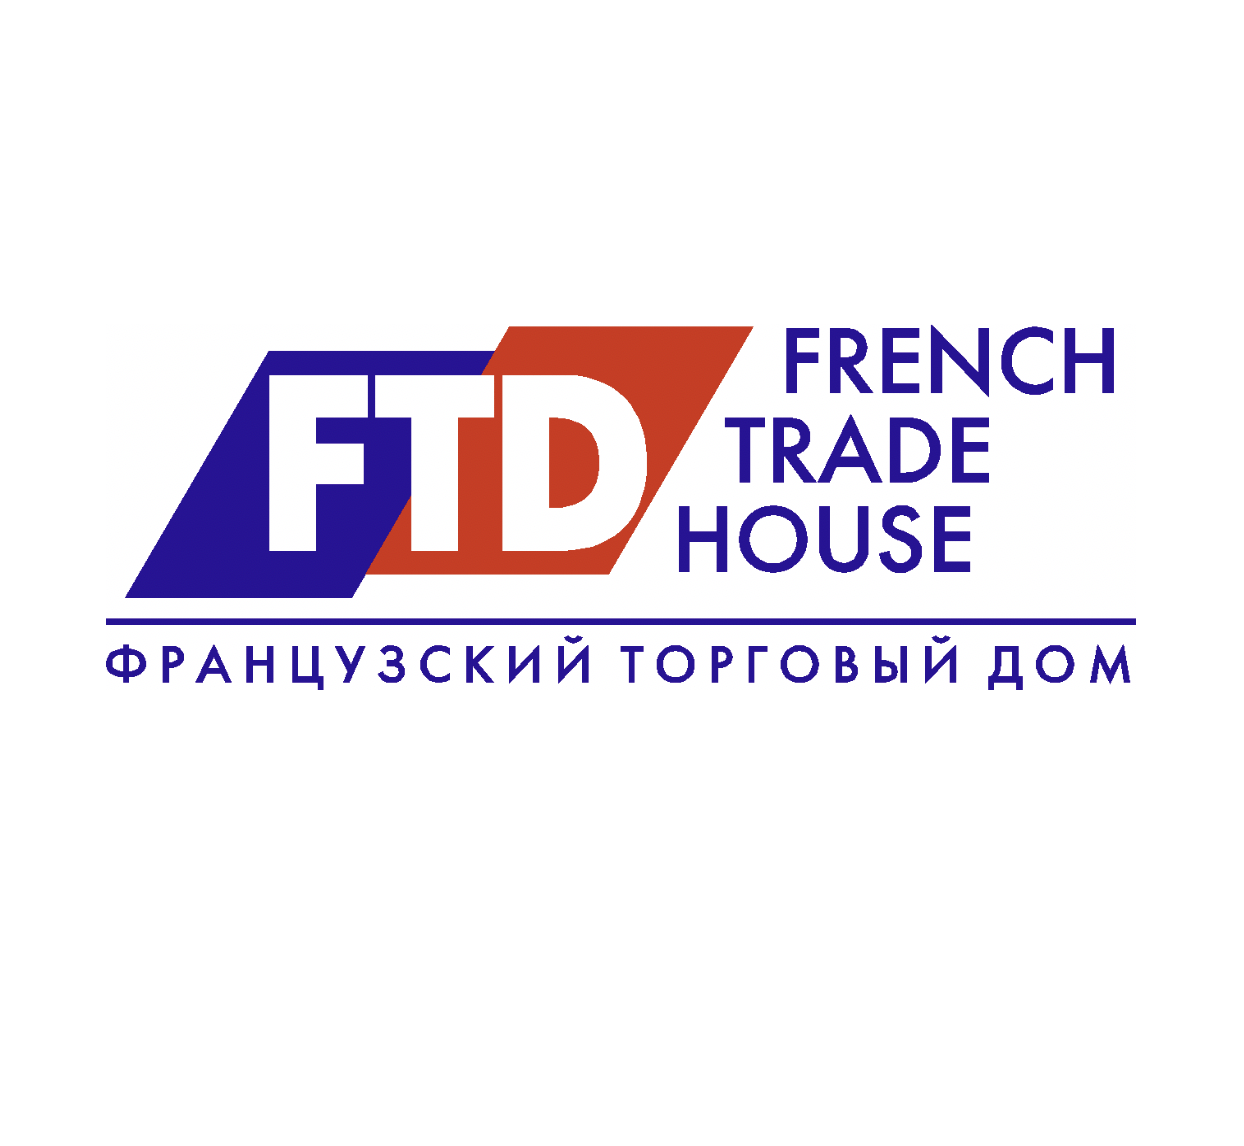 FTD Logo - FTD LOGO.png